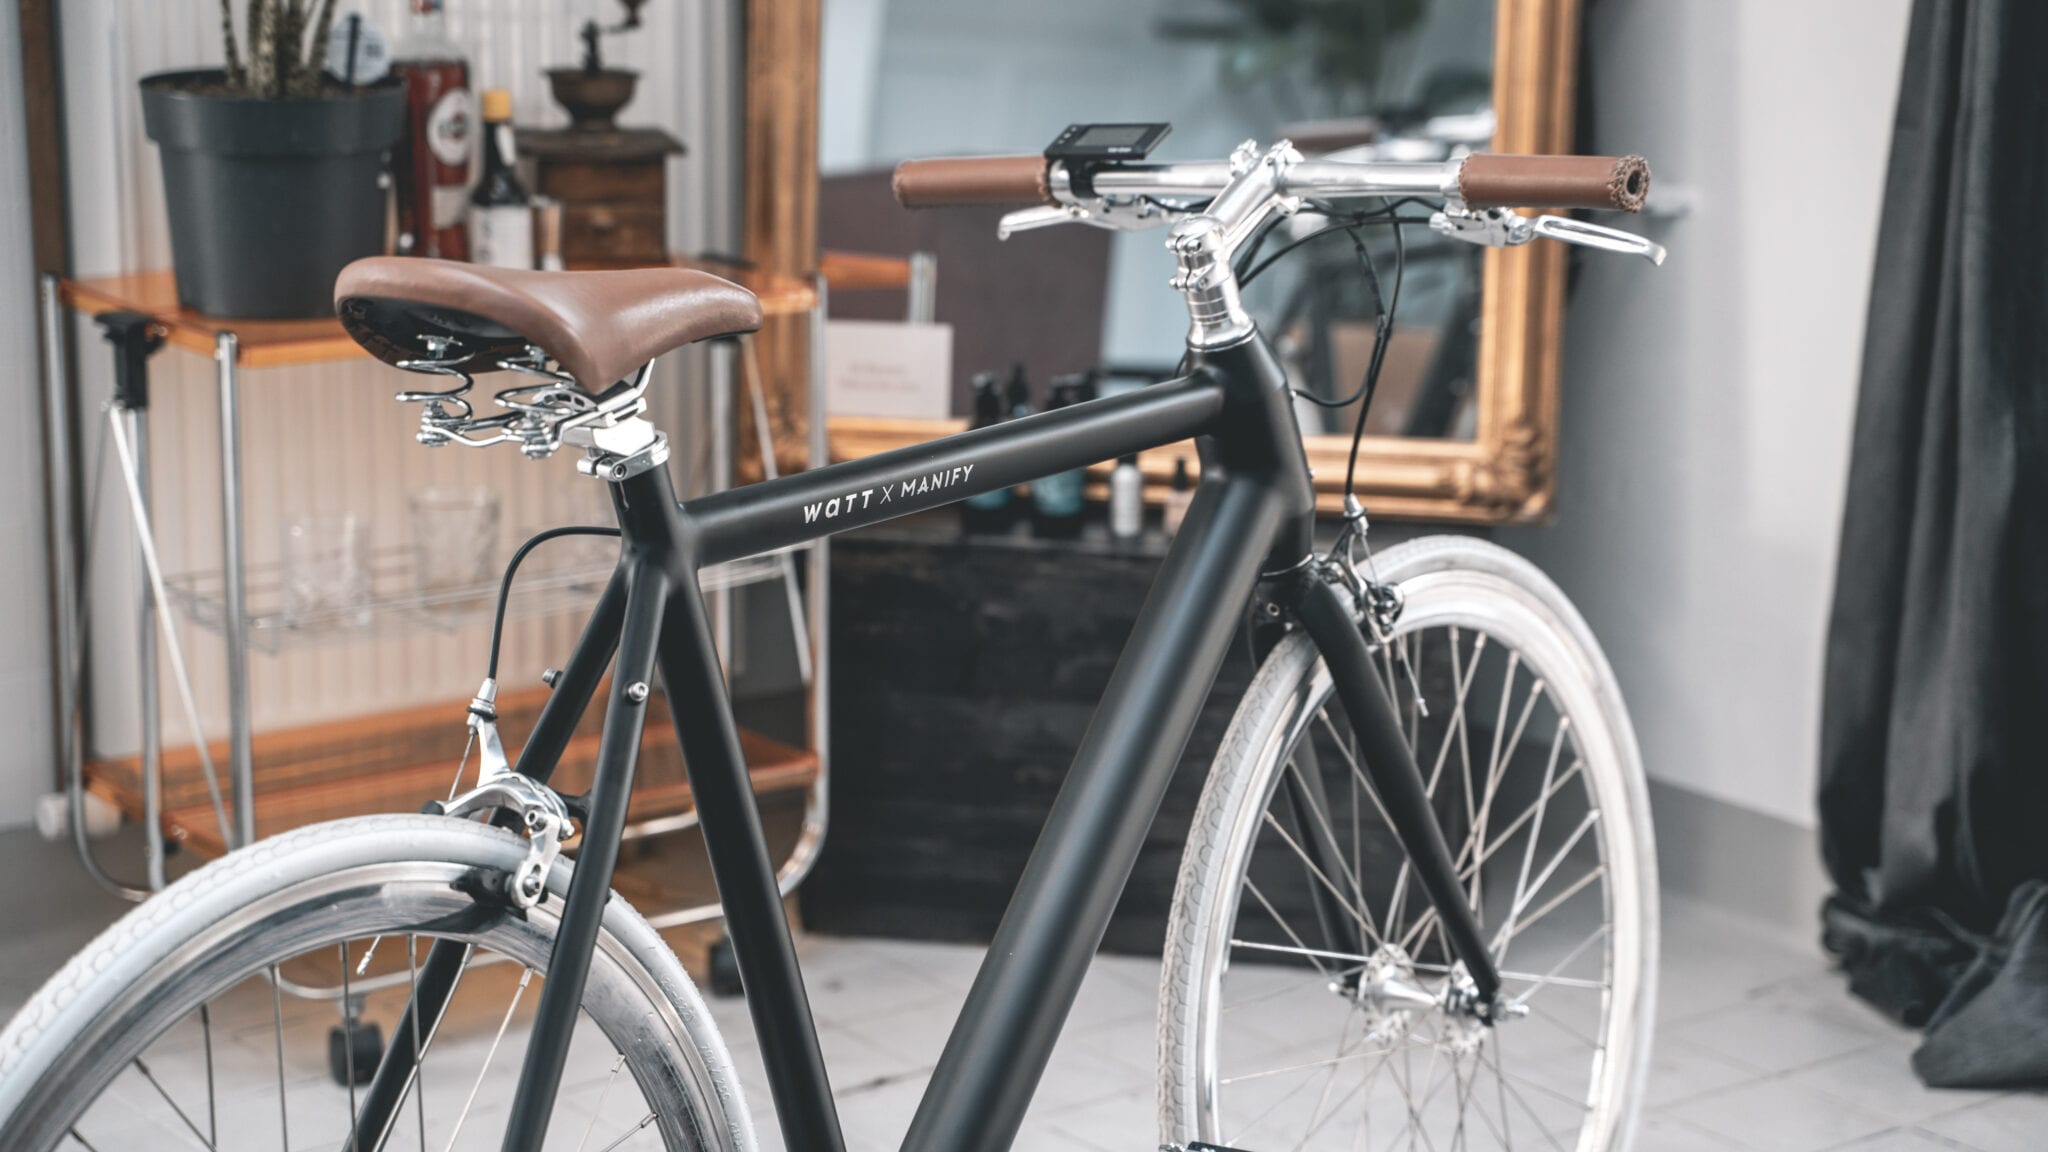 WATT e-bike, MANIFY X WATT: zo stijlvol kan een urban e-bike zijn